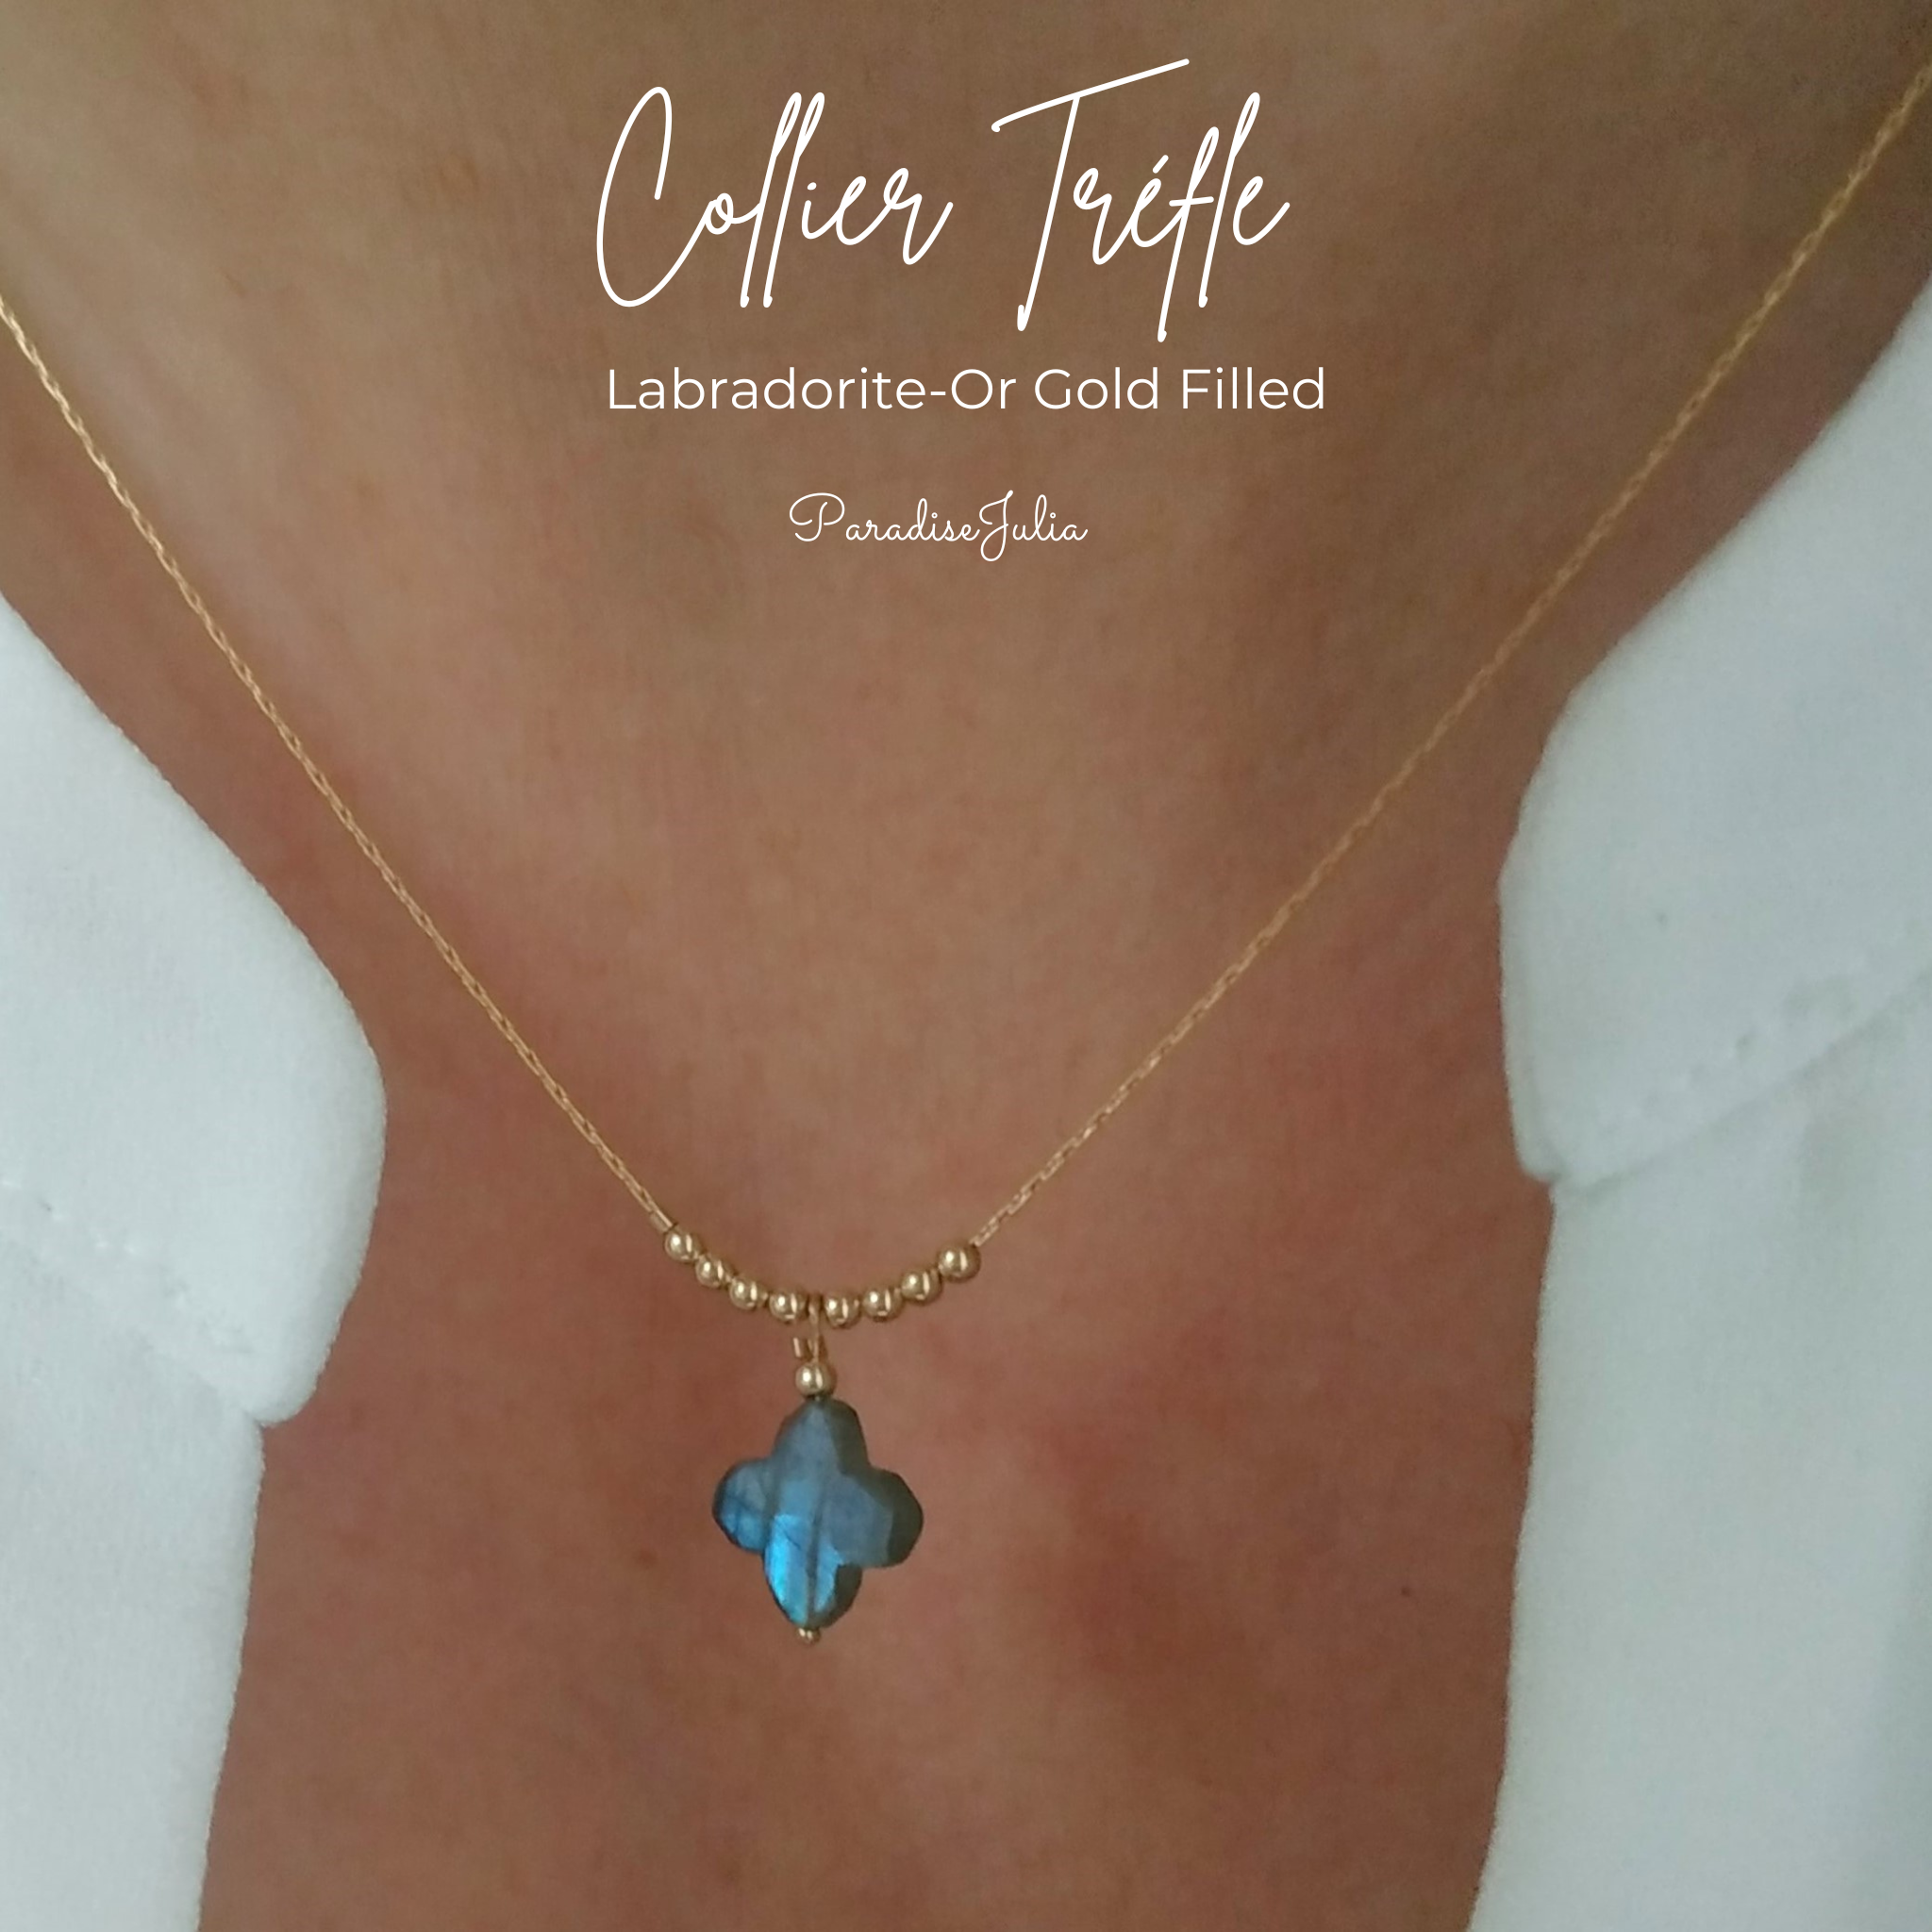 Collier Trèfle- Labradorite-Pierre Naturelle-or gold filled